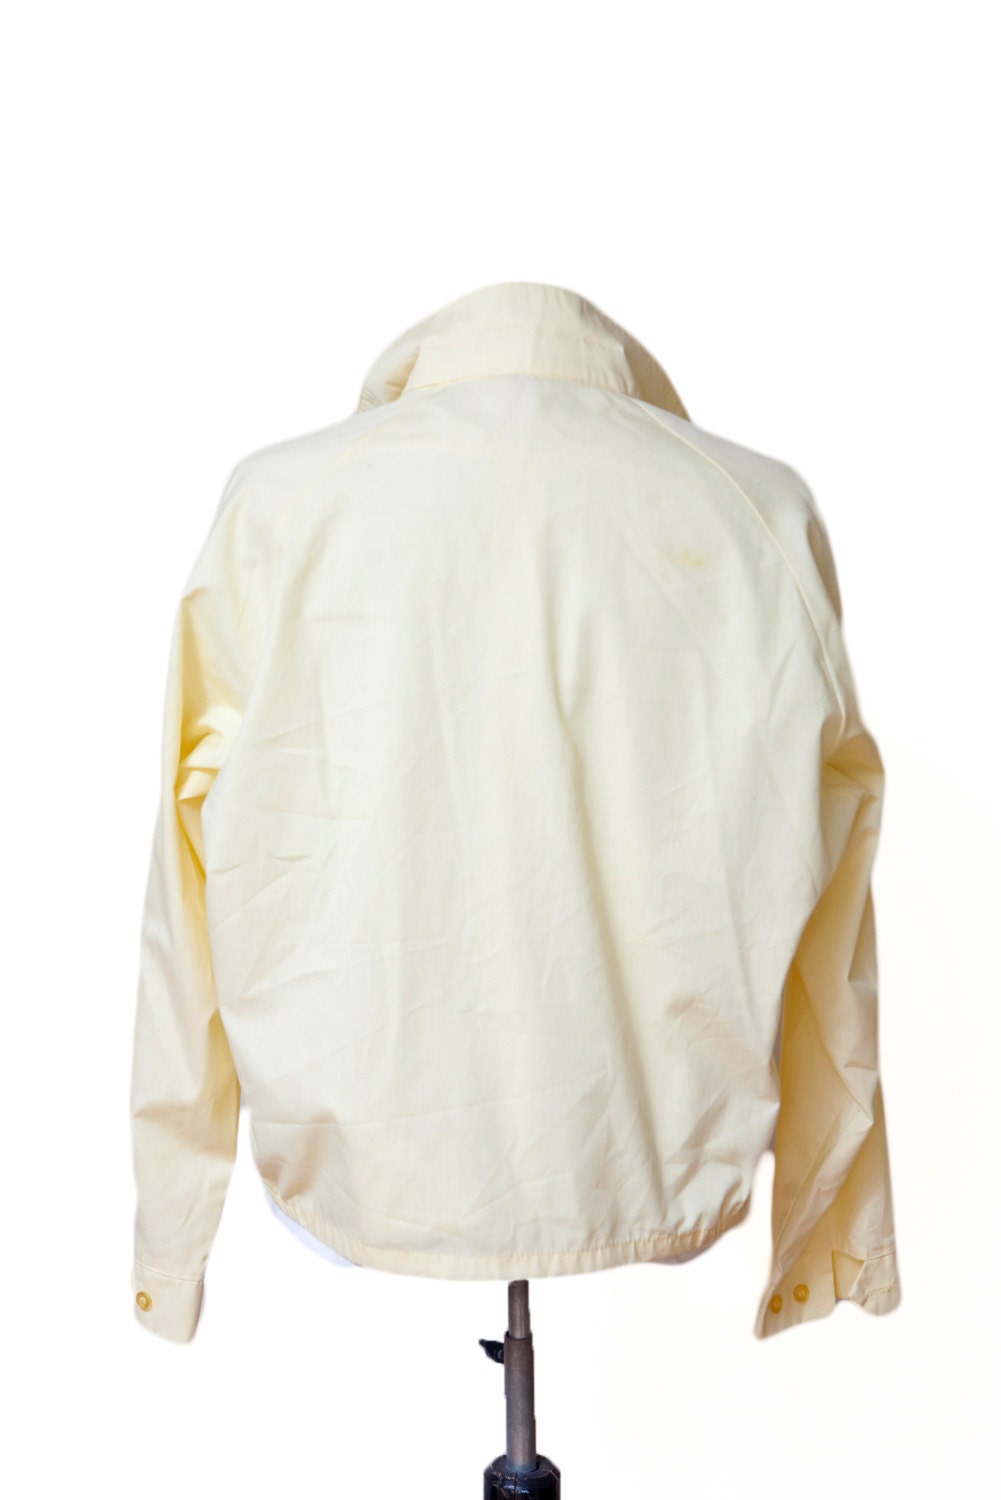 Men's Coat / Vintage Yellow Spring Jacket by Sir Jack / | Etsy